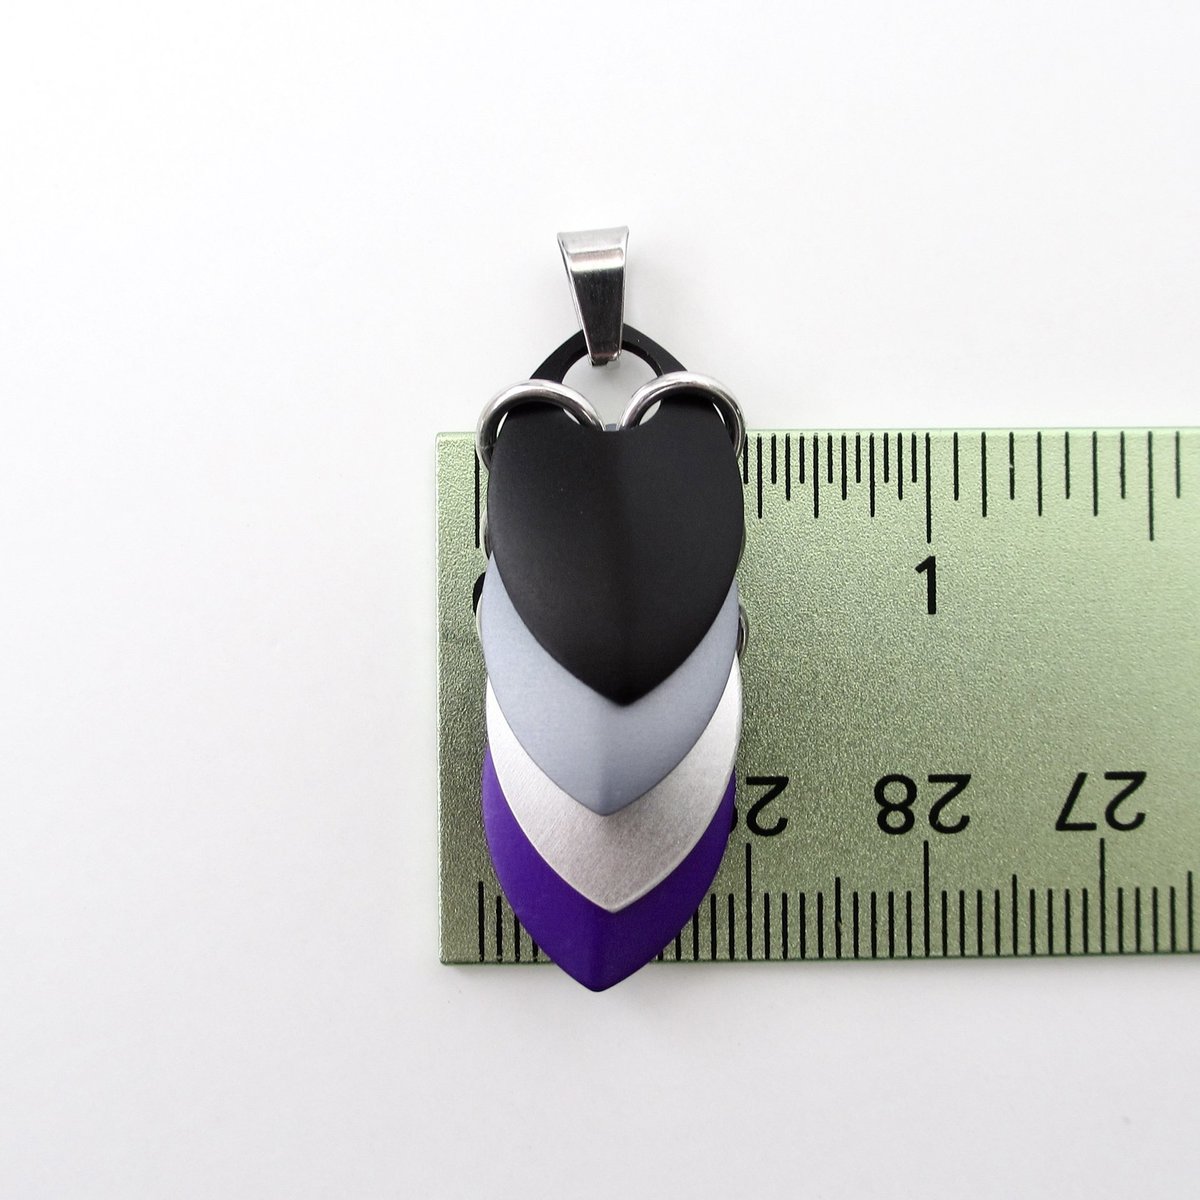 Ace pride pendant necklace, chainmail scale pendant, asexual pride jewelry, black gray white purple